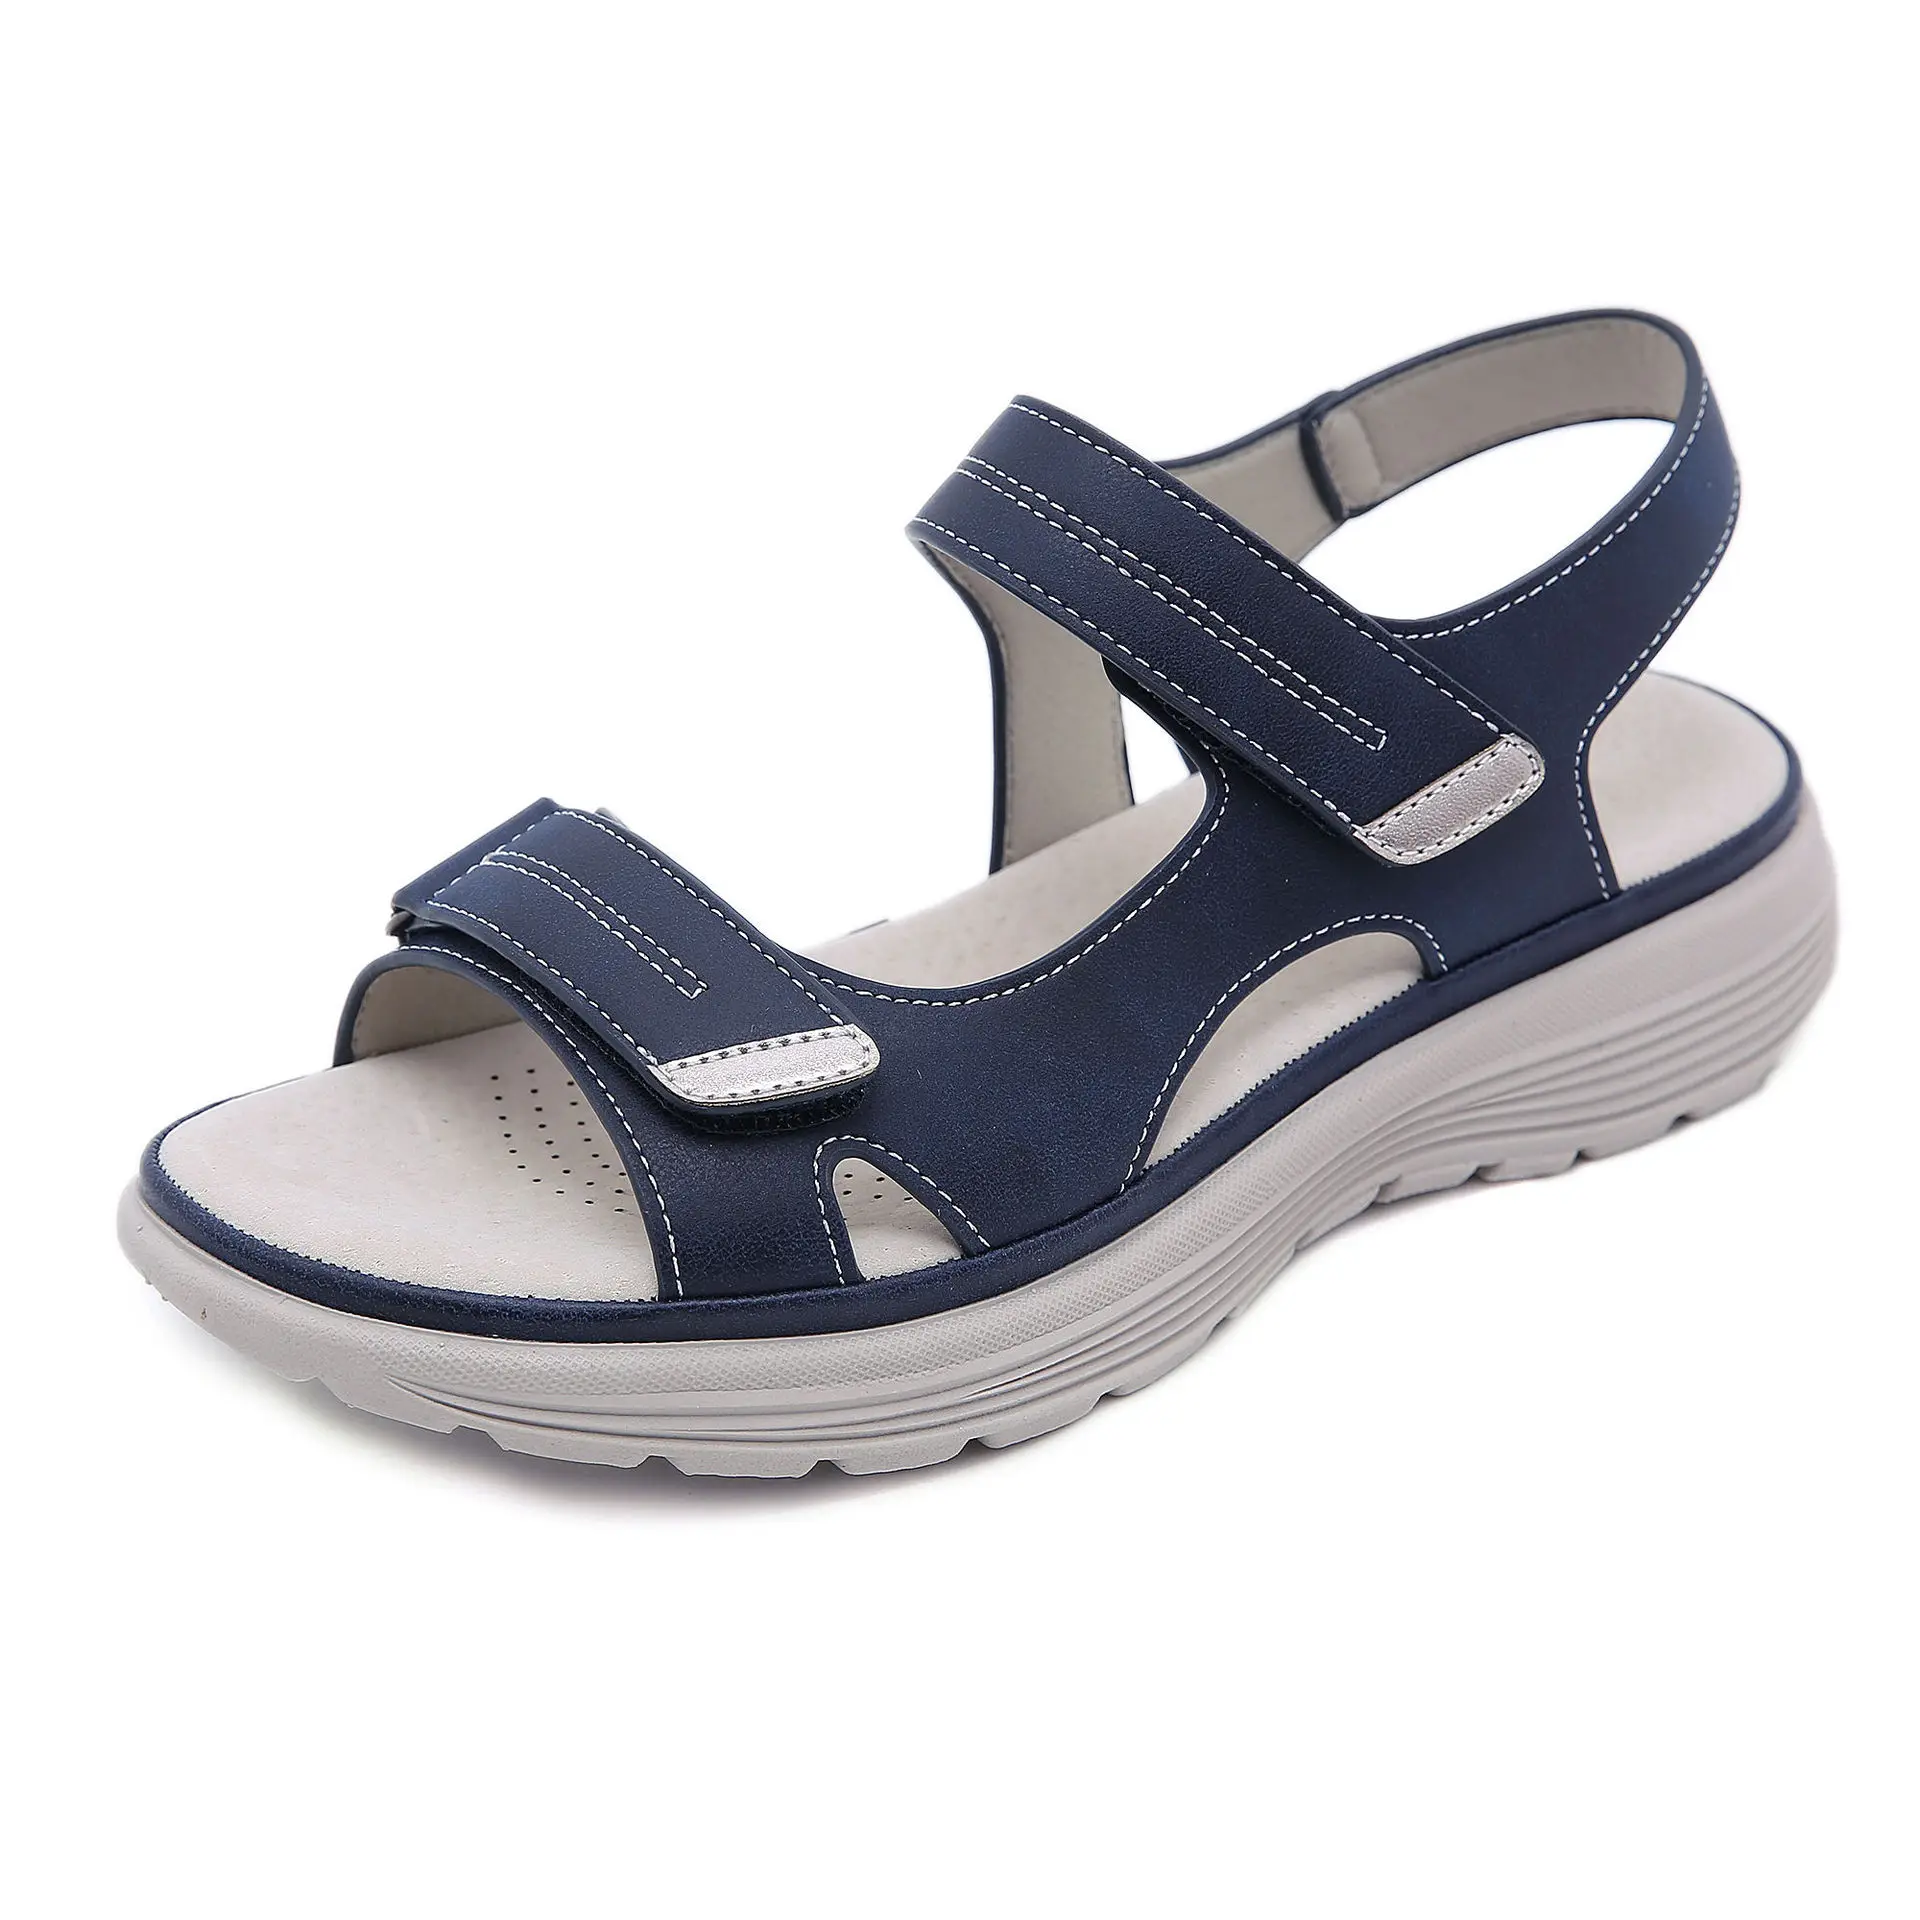 

SIKETU Brand Hook Loop Sandals Women Summer Leather Light Leisure Wedge Platform Shoes Blue Girls Outside Anti-slide Apricot 42